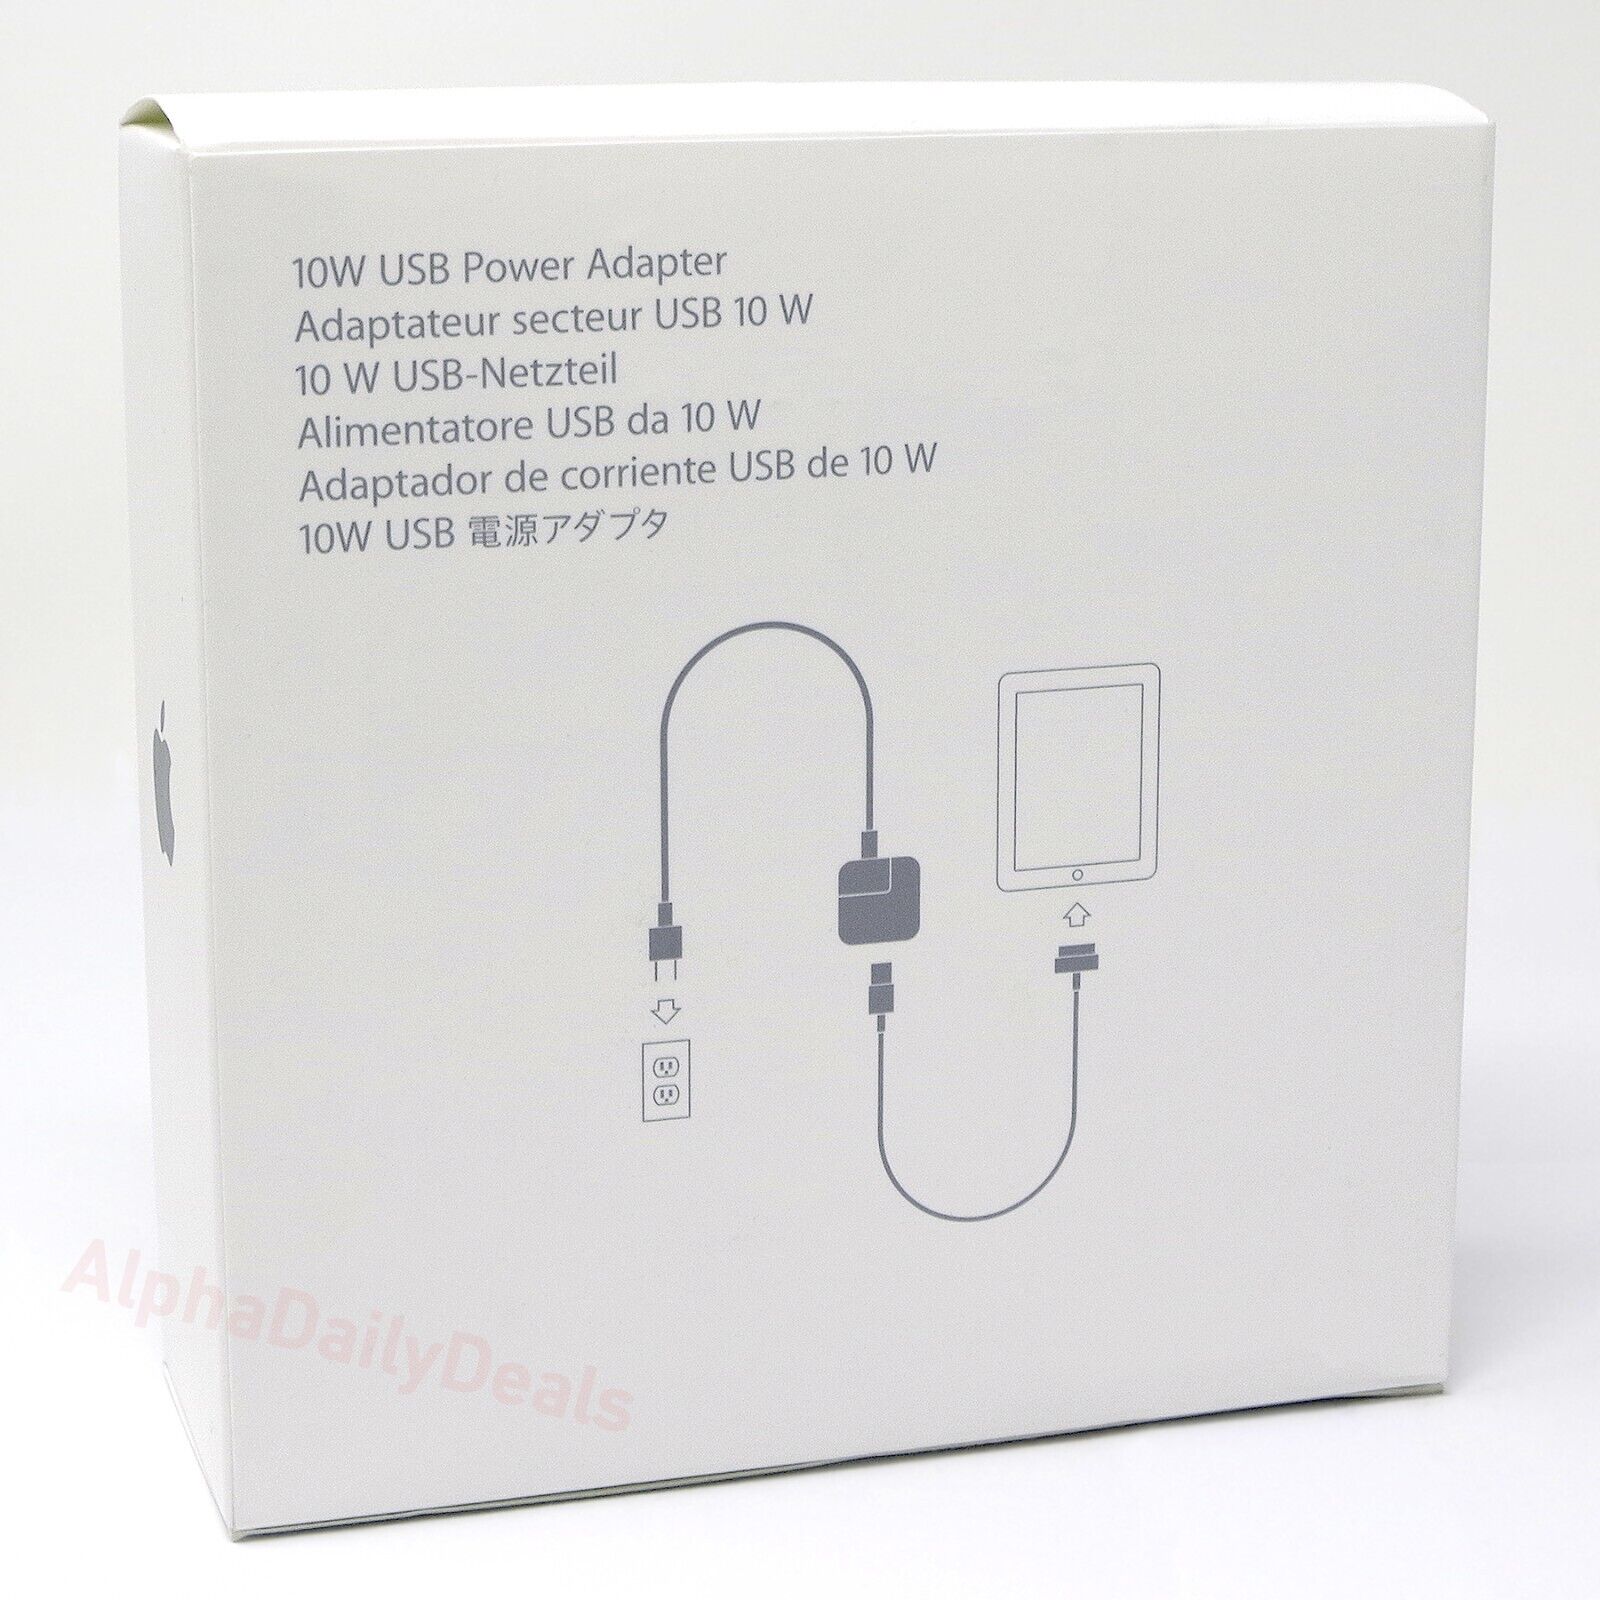 Genuine OEM Apple iPad 10W USB Power Adapter 30 Pin Charger